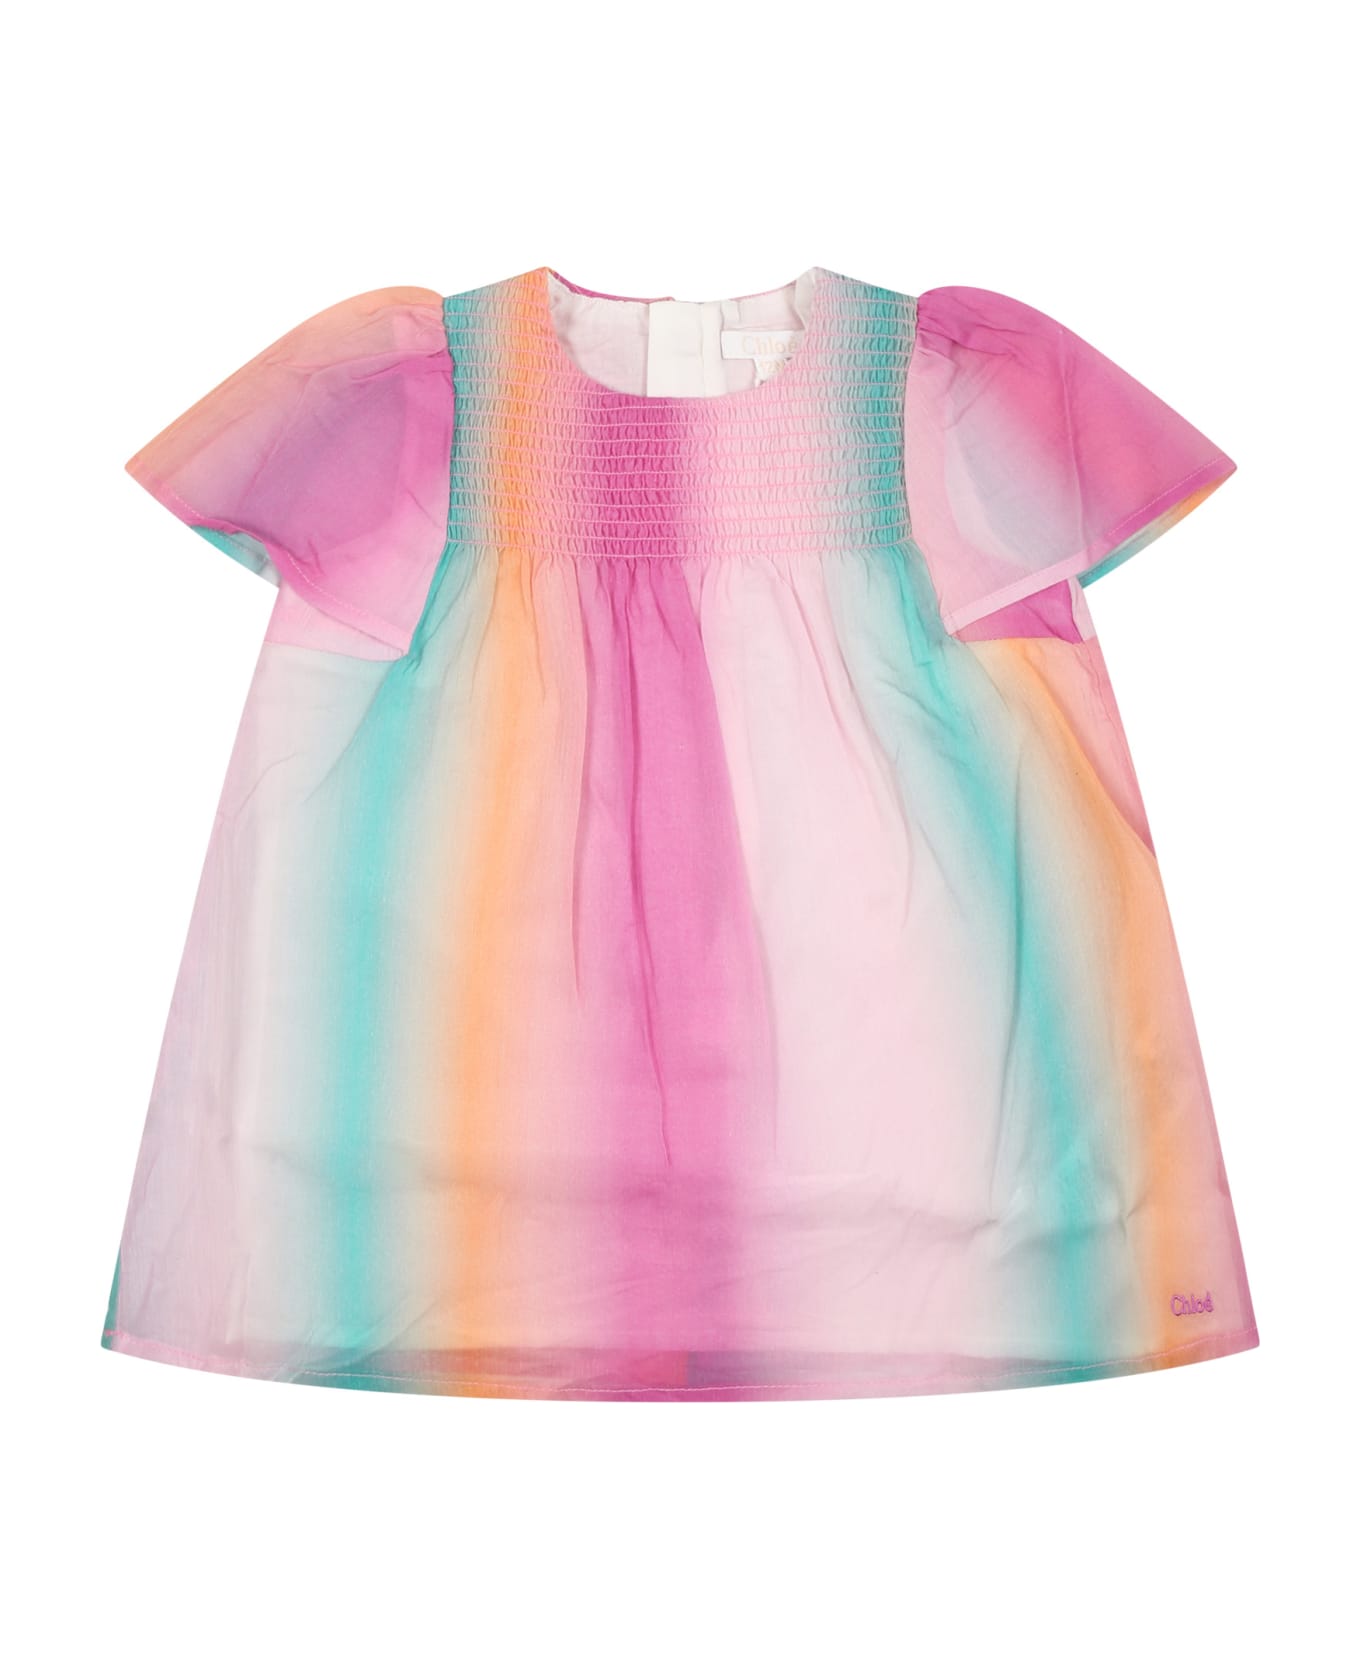 Chloé Multicolor Dress For Baby Girl - Multicolor ウェア